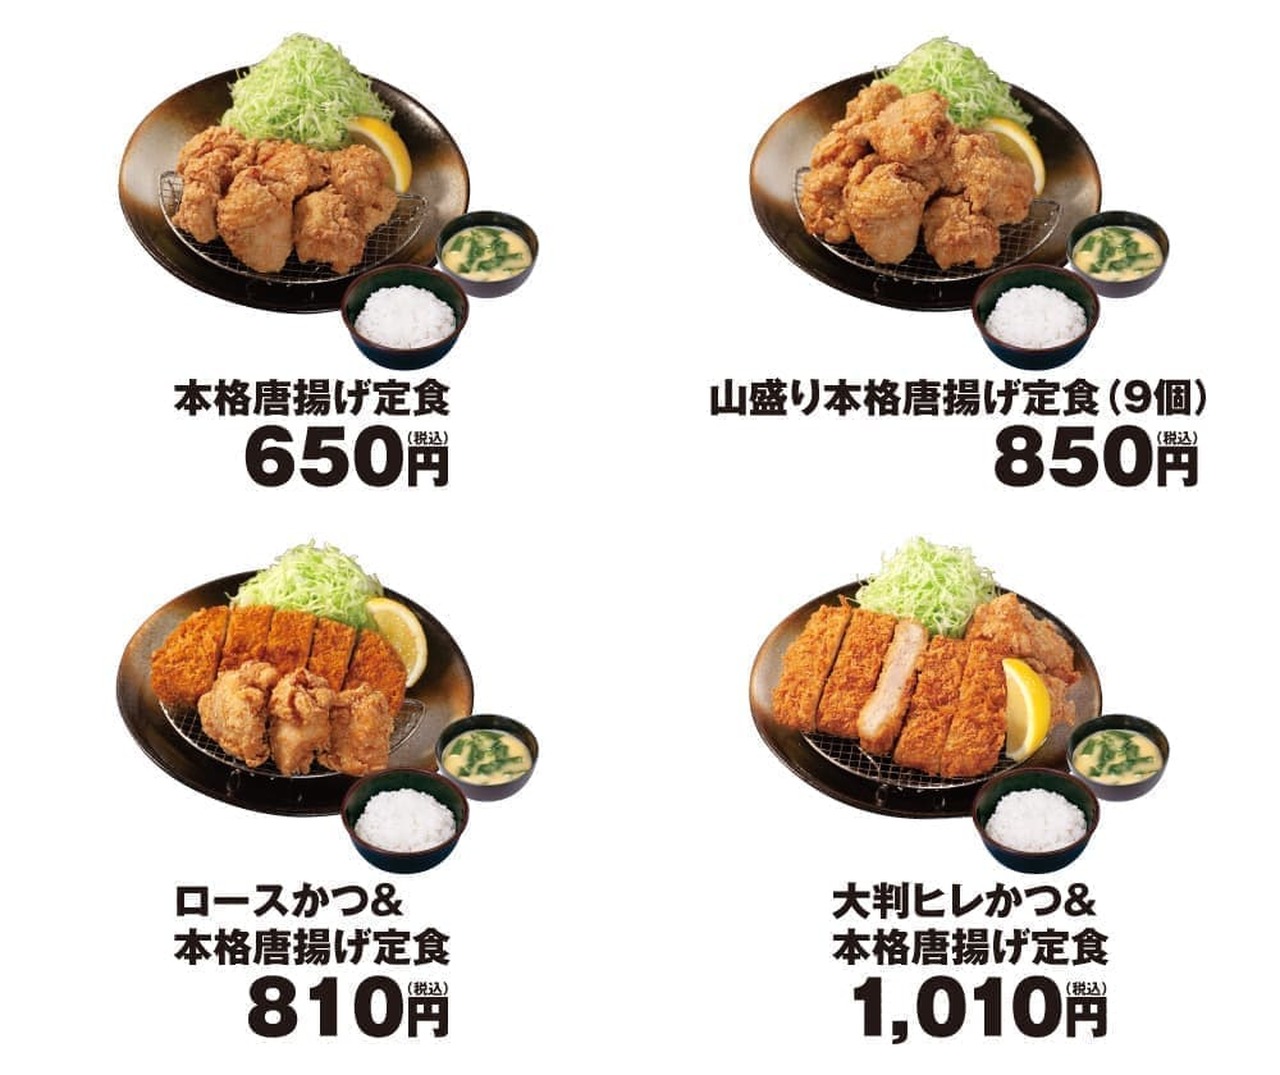 Matsunoya "Authentic fried chicken"